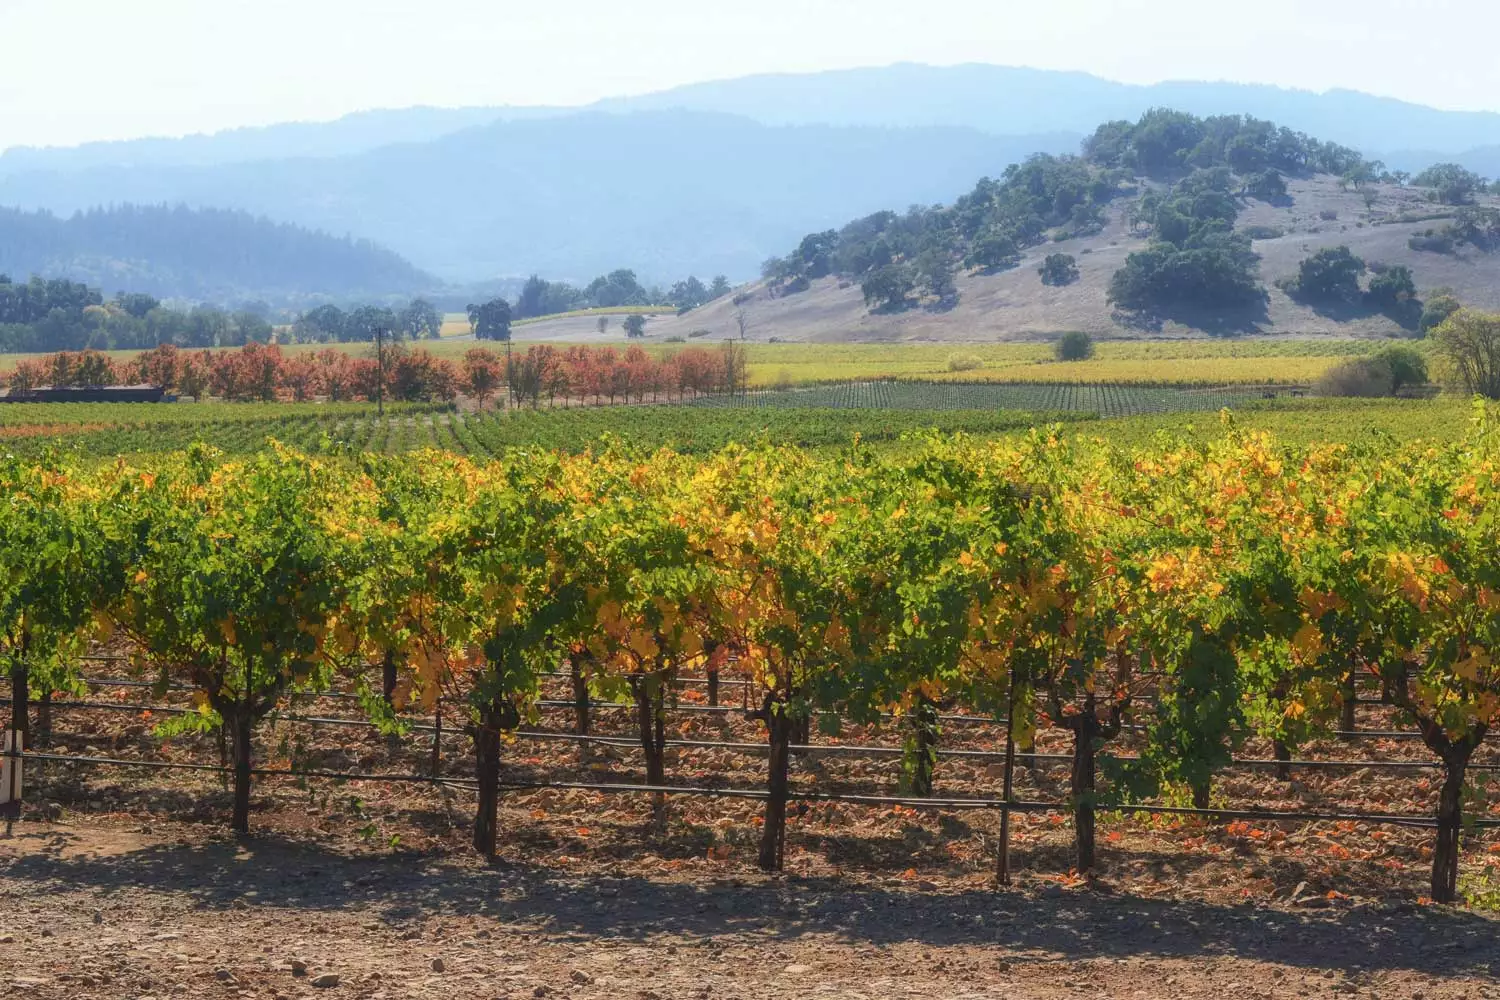 A vineyard in Lodi, california.